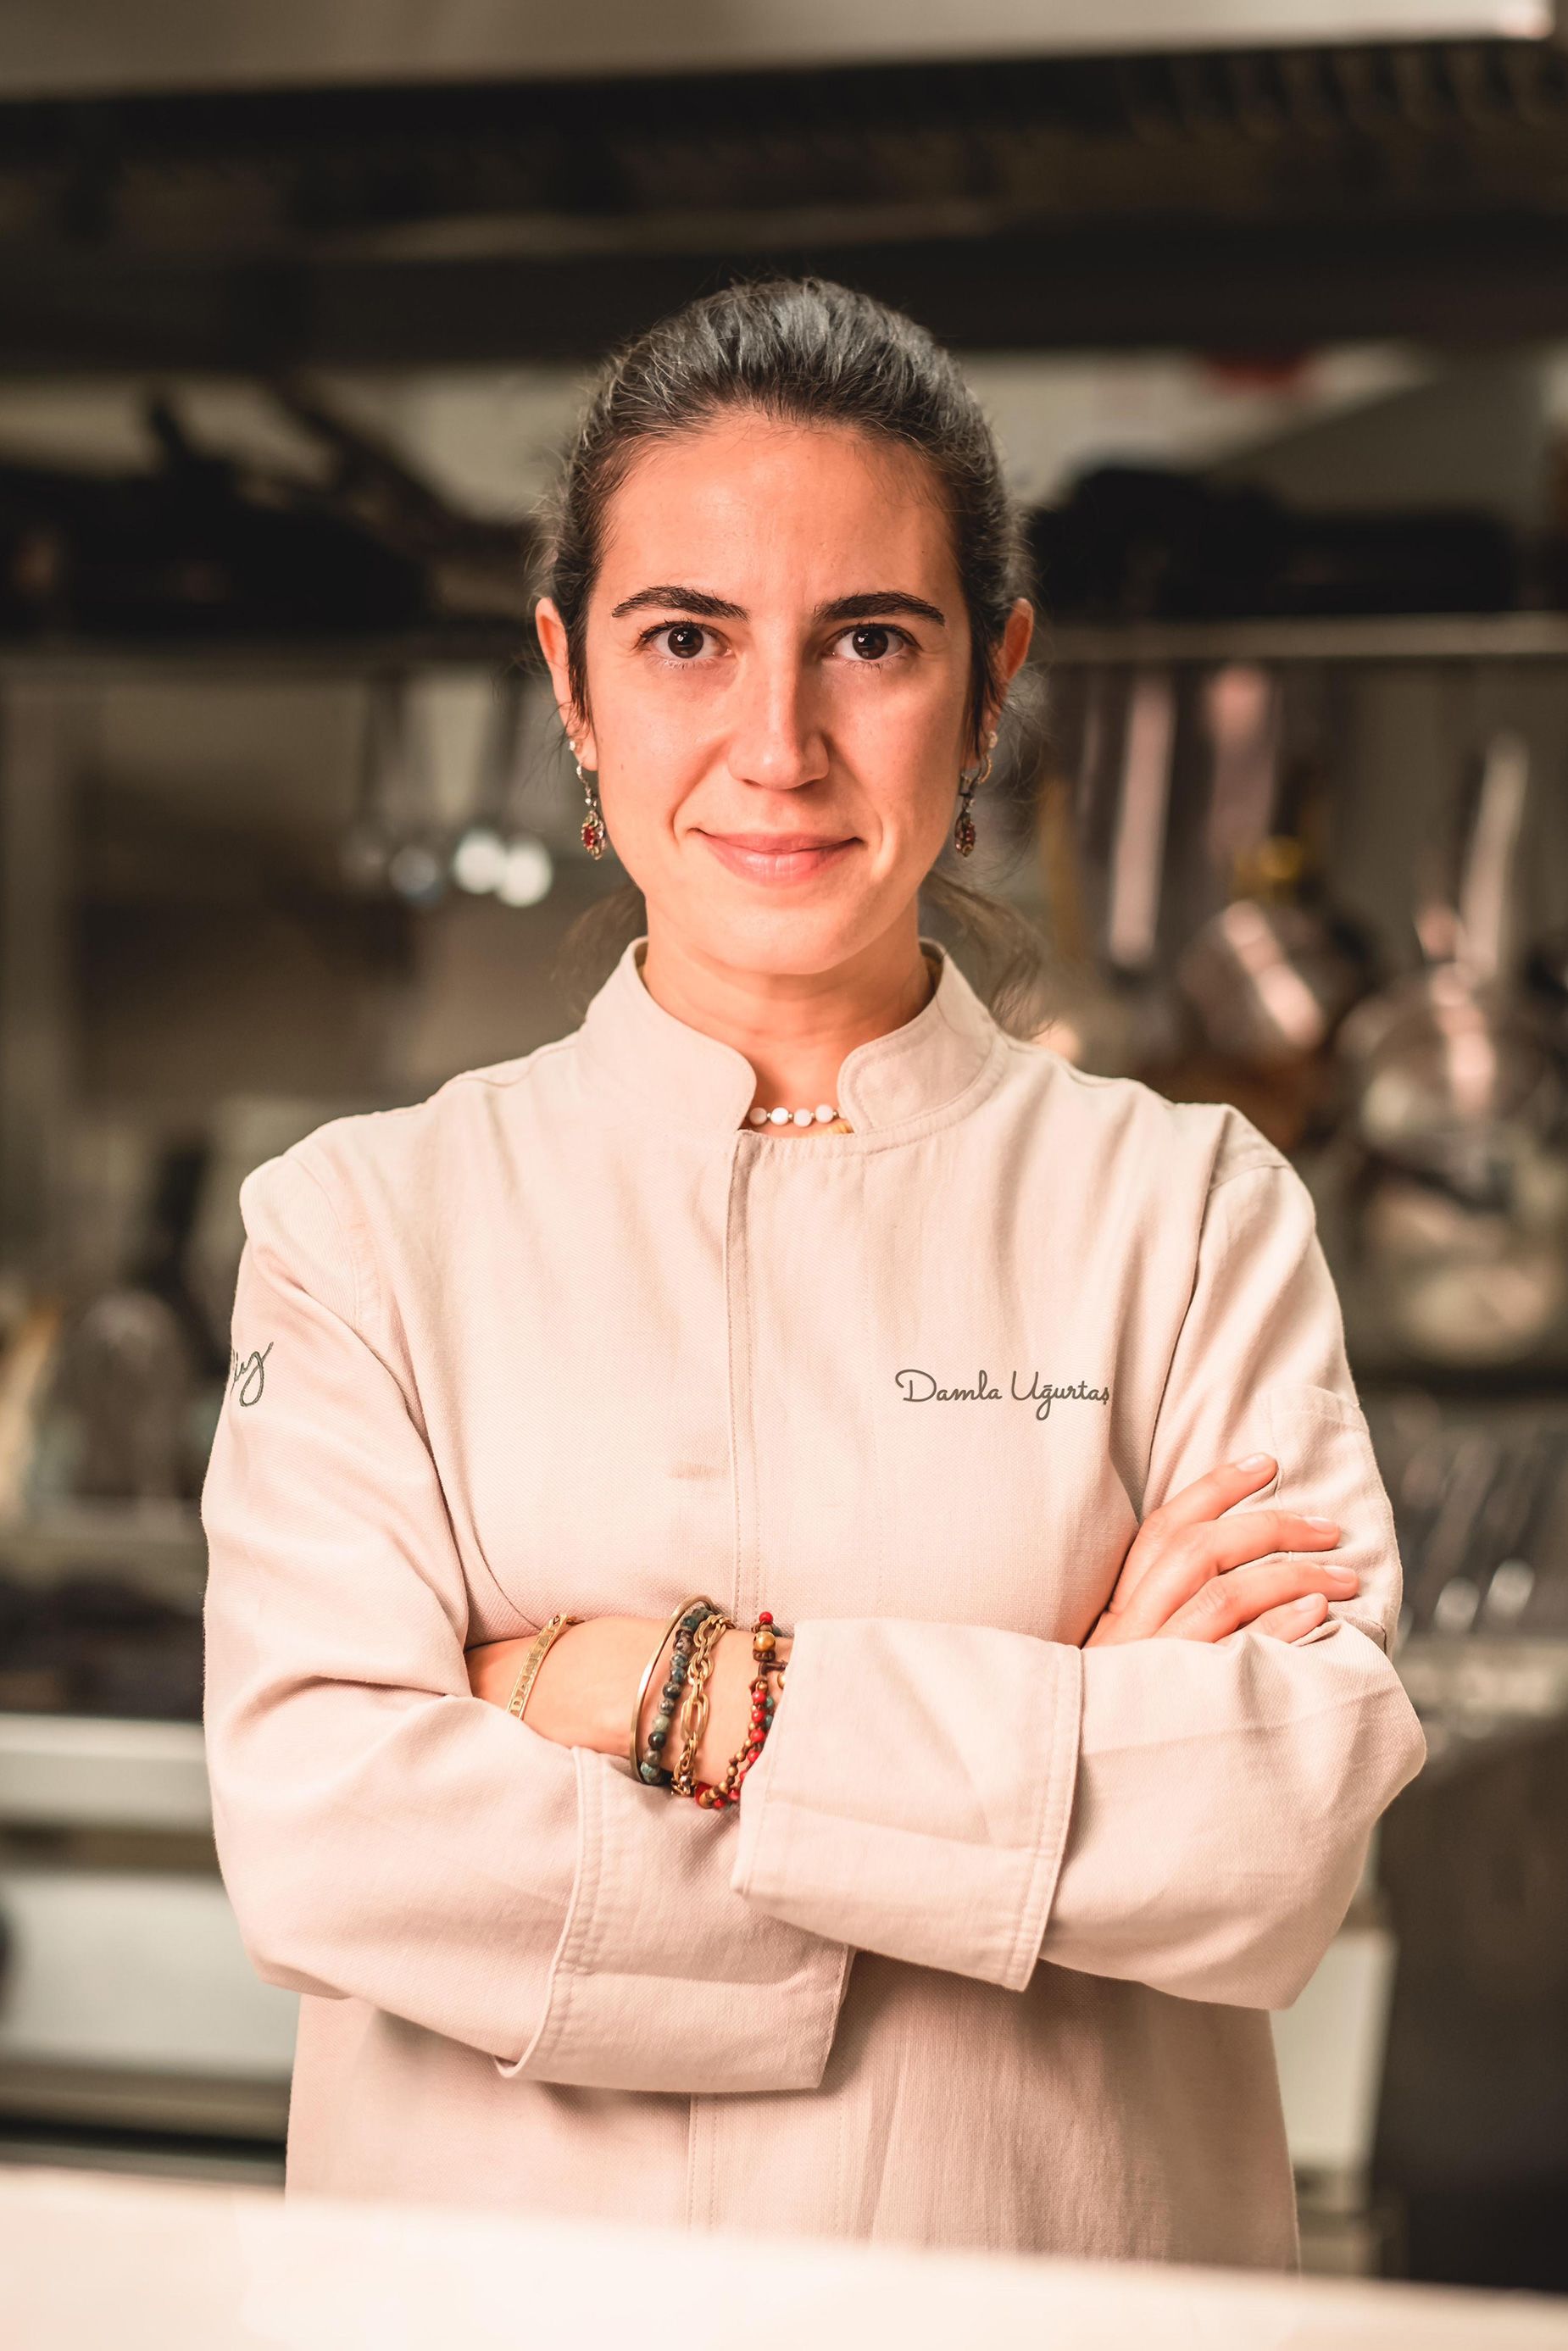 Chef Damla Uğurtaş undertook a challenging renovation process to bring her restaurant to life.